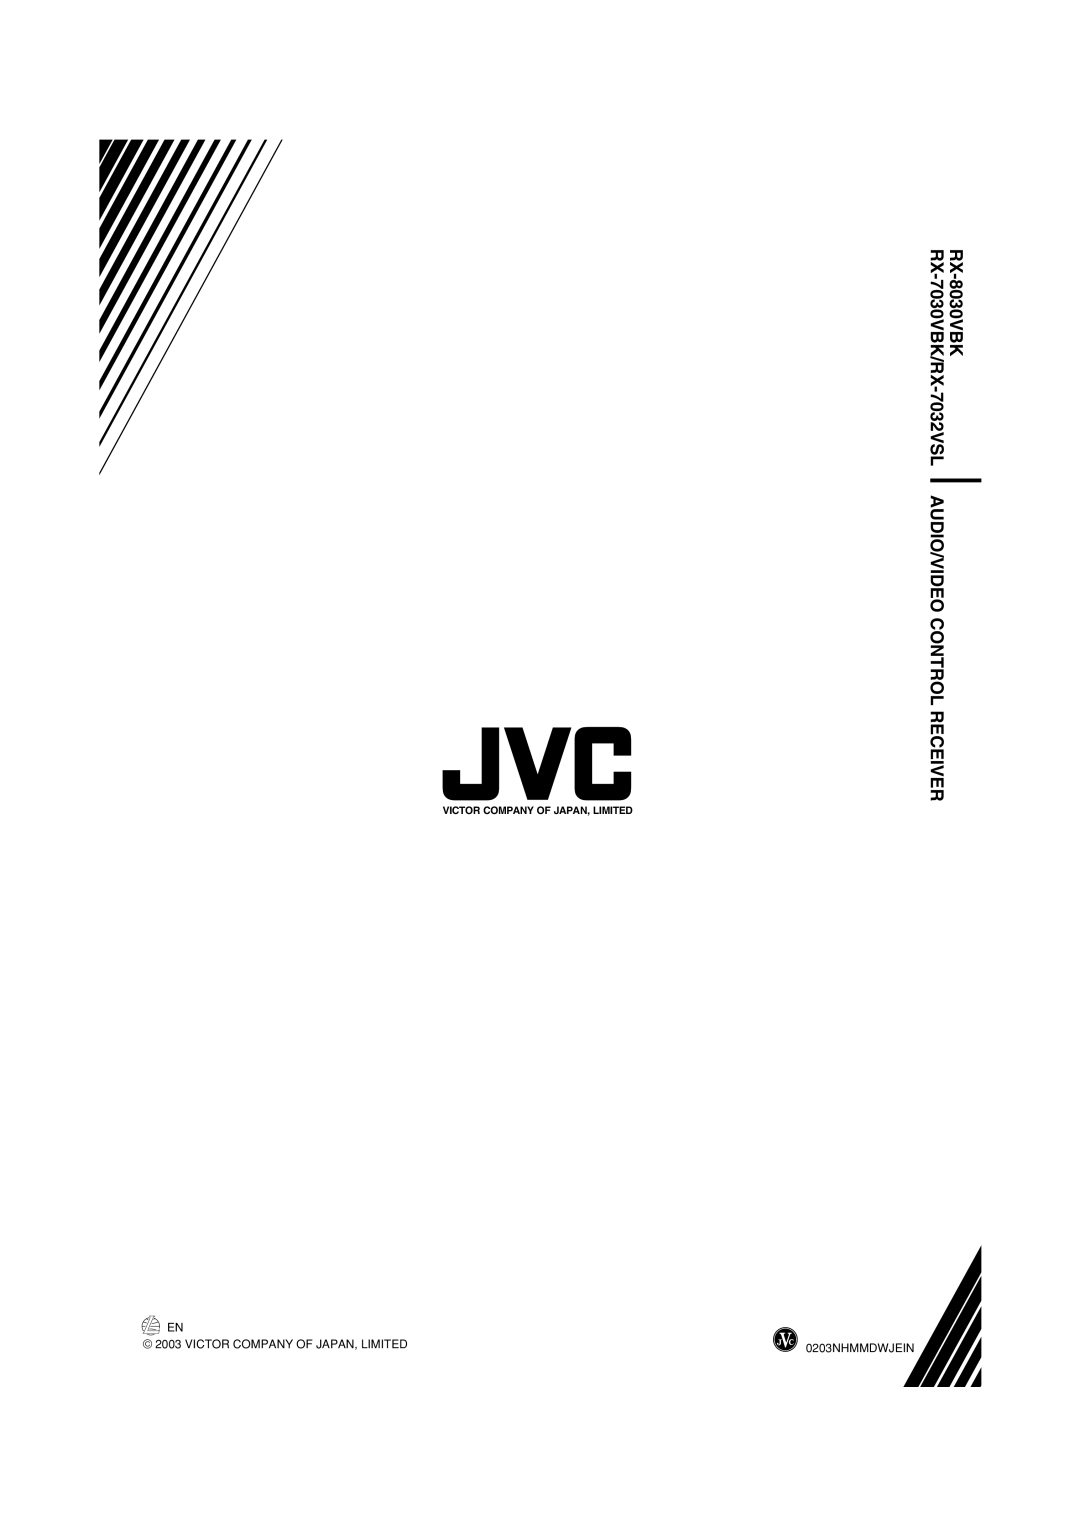 JVC RX7030VBK manual RX-7030VBK/RX-7032VSLAUDIO/VIDEO CONTROL RECEIVER, Victor Company Of Japan, Limited, 0203NHMMDWJEIN 